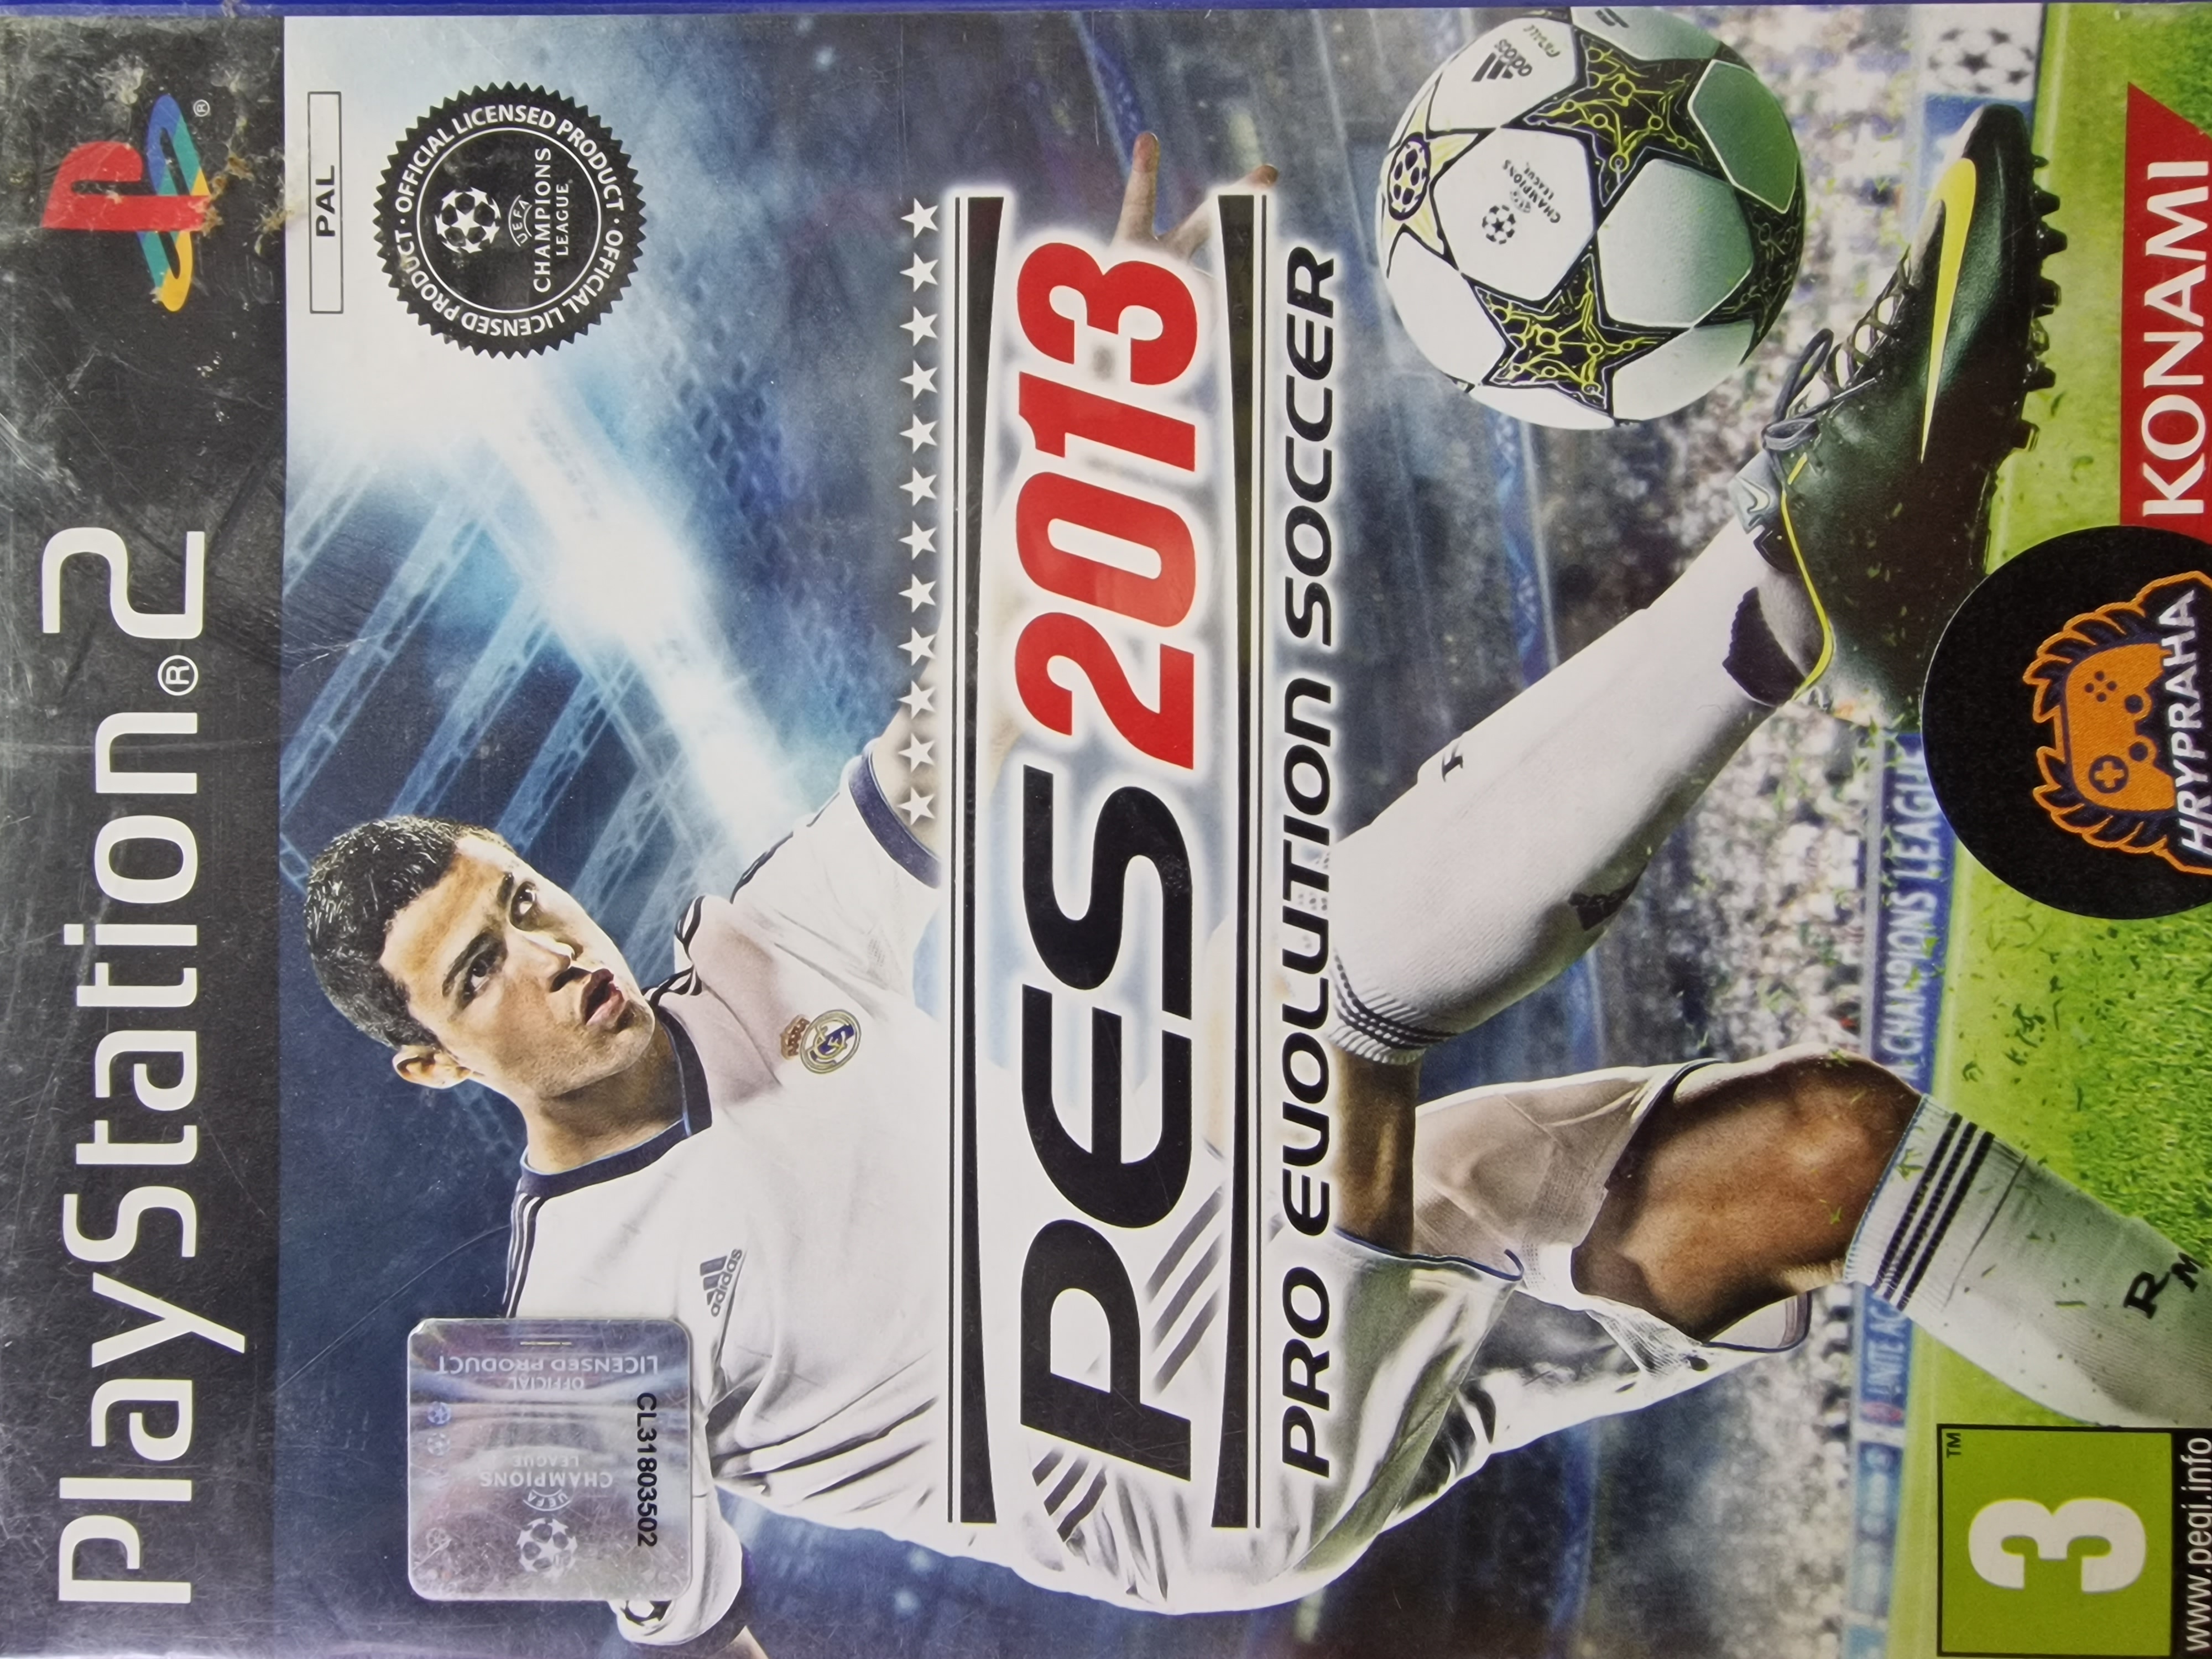 Pro evolution soccer 2013 PS2